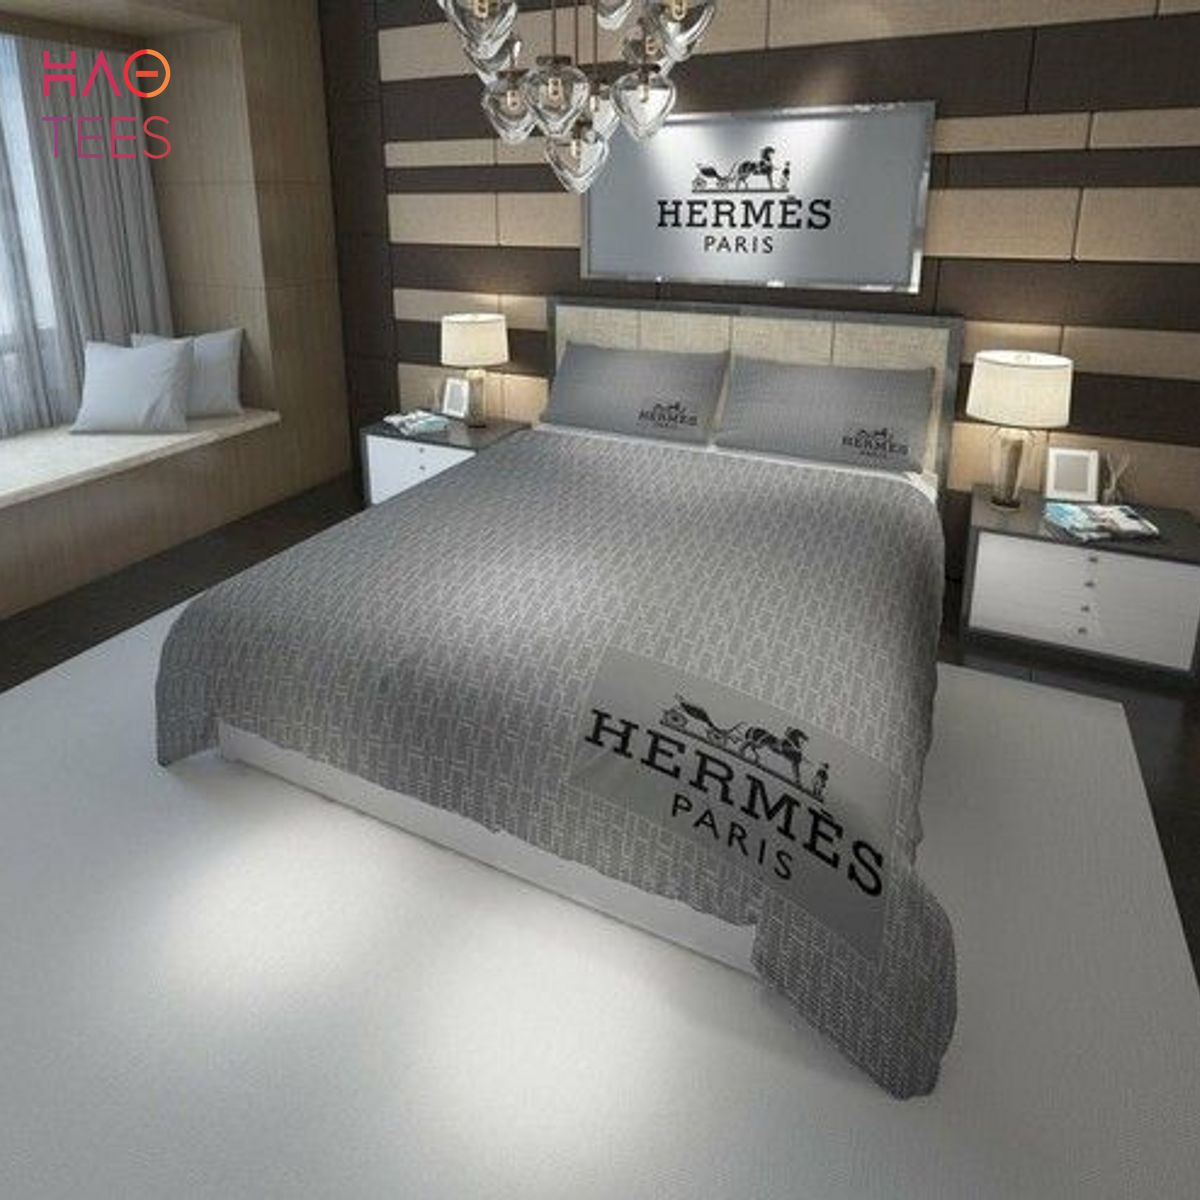 HOT Hermes Paris Full Gray Luxury Color Bedding Set